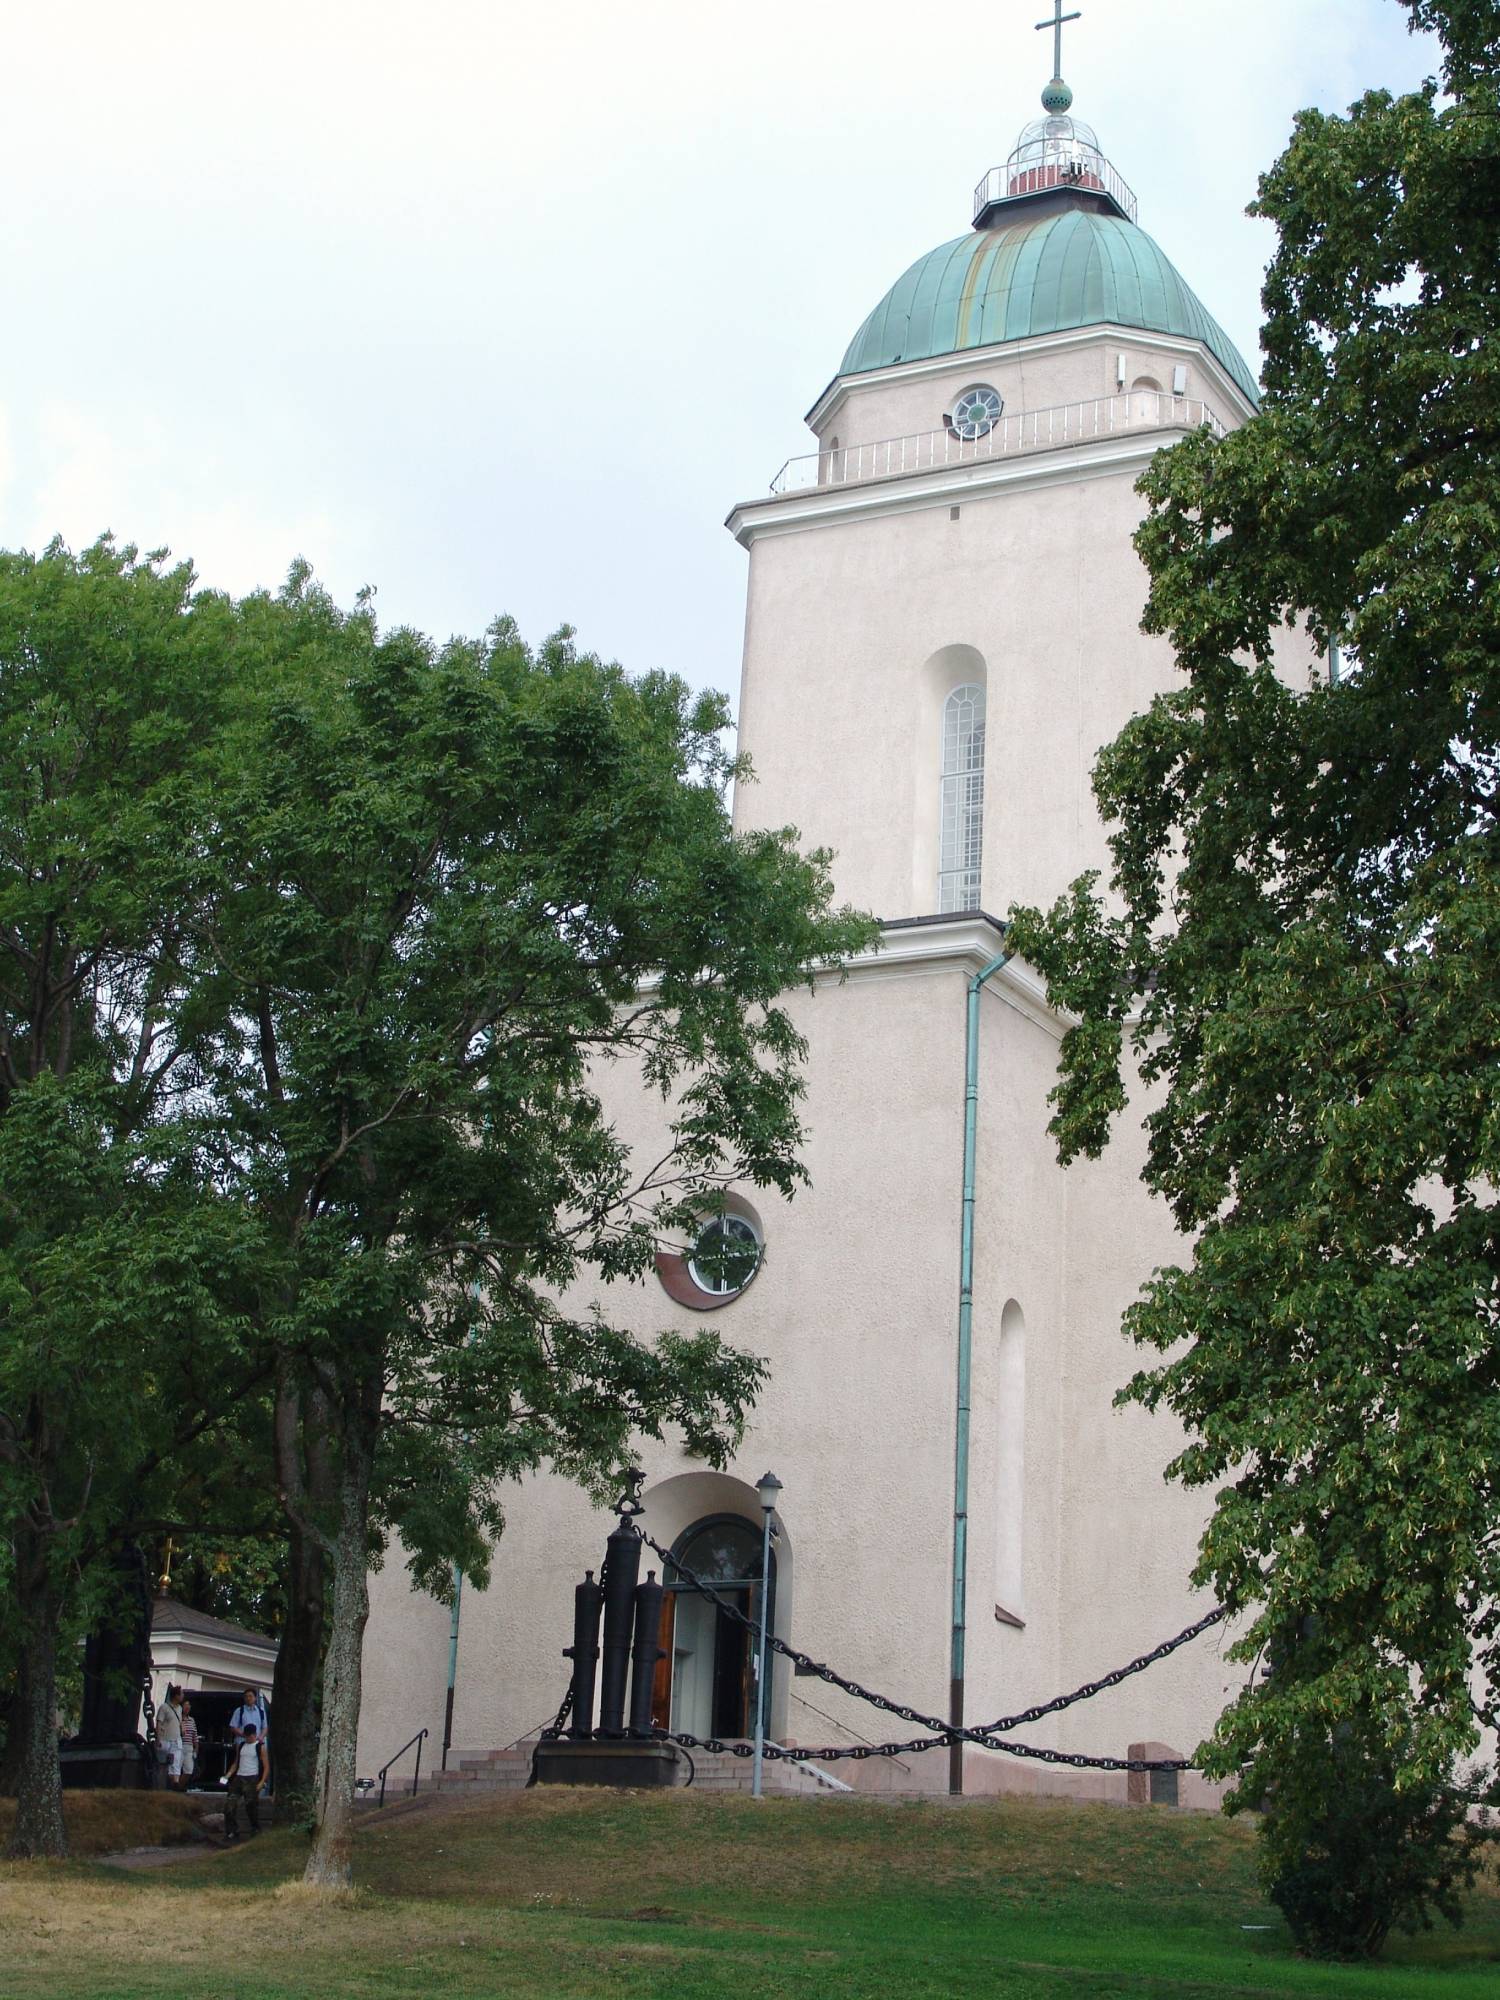 Helsinki - Suomenlinna Church